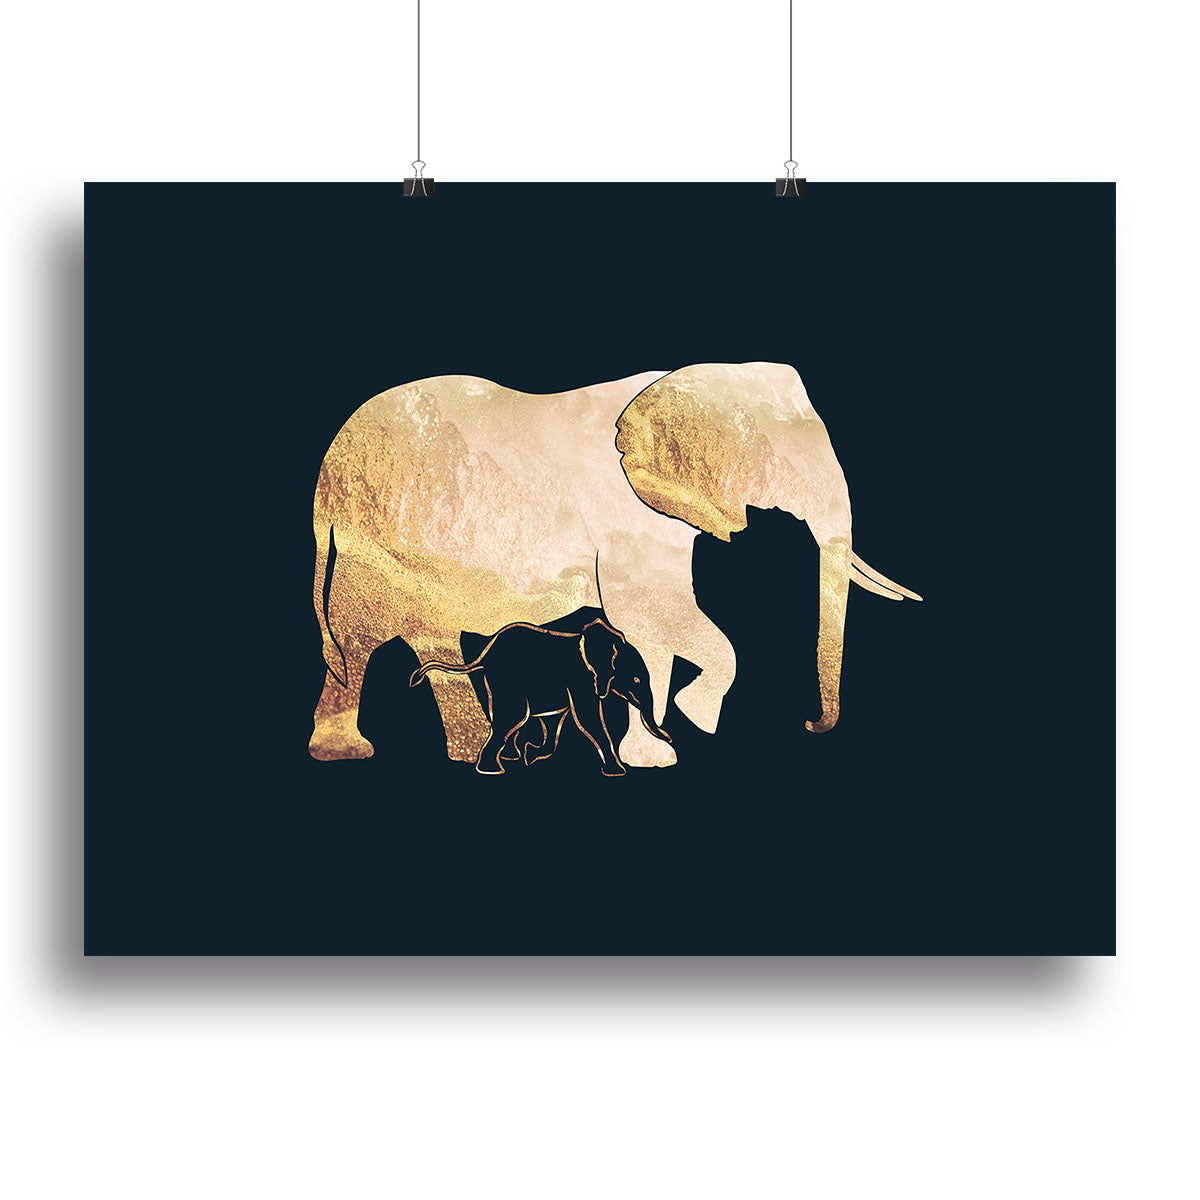 Black gold elephants 2 Canvas Print or Poster - 1x - 2